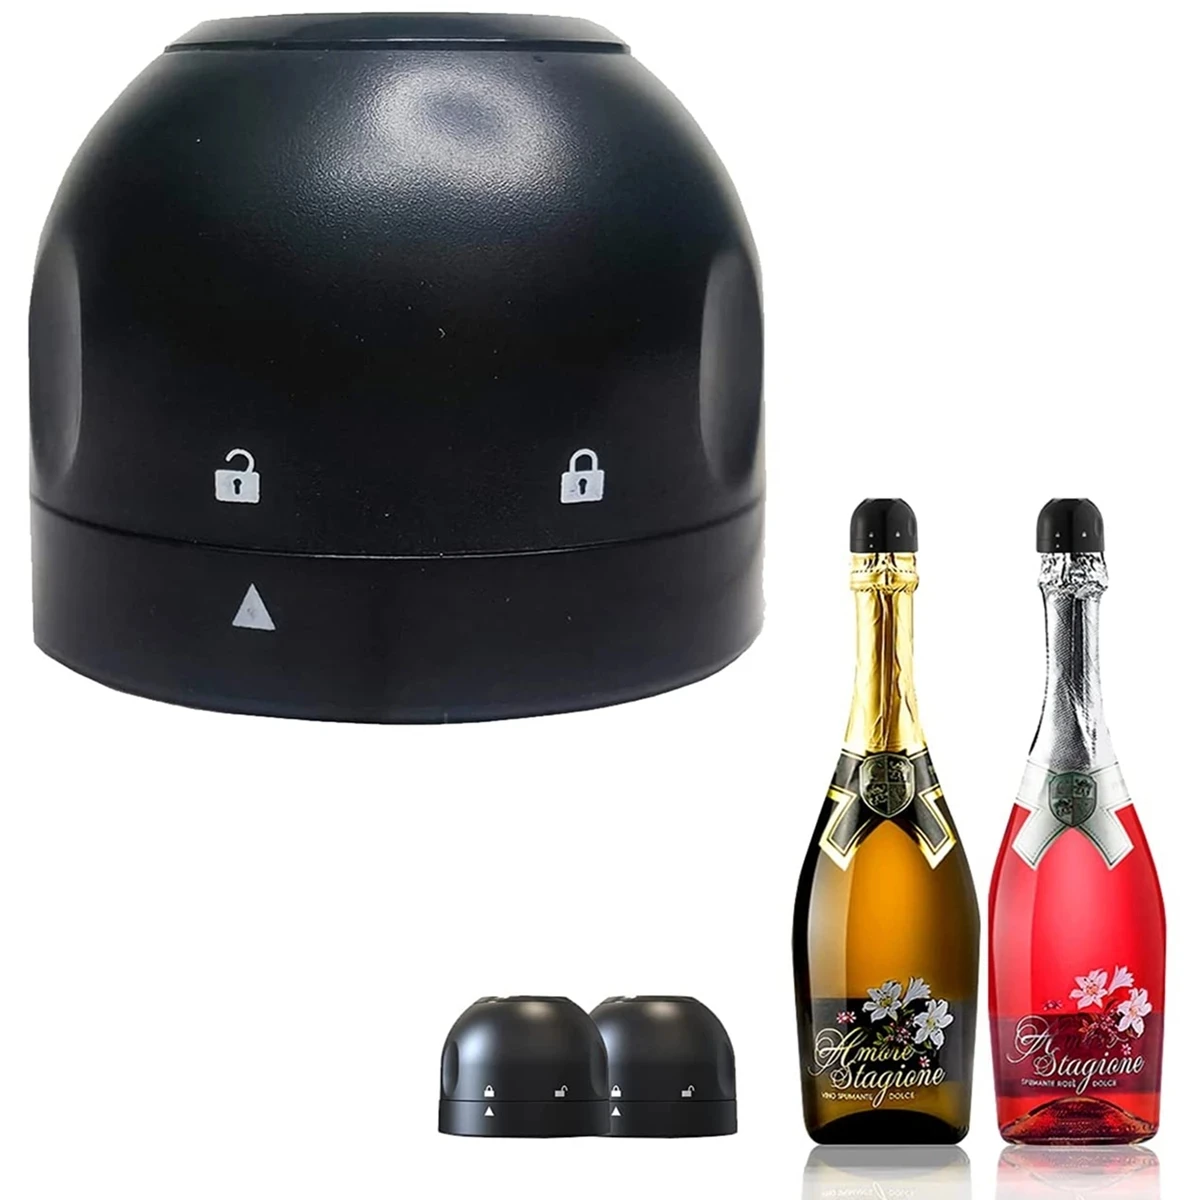 

A1205 1pc ABS Sealed Champagne Bottle Stopper Vacuum Red Wine Bottle Cap Stopper Bar Tools Leak-proof Retain Freshness Wine Plug, Black